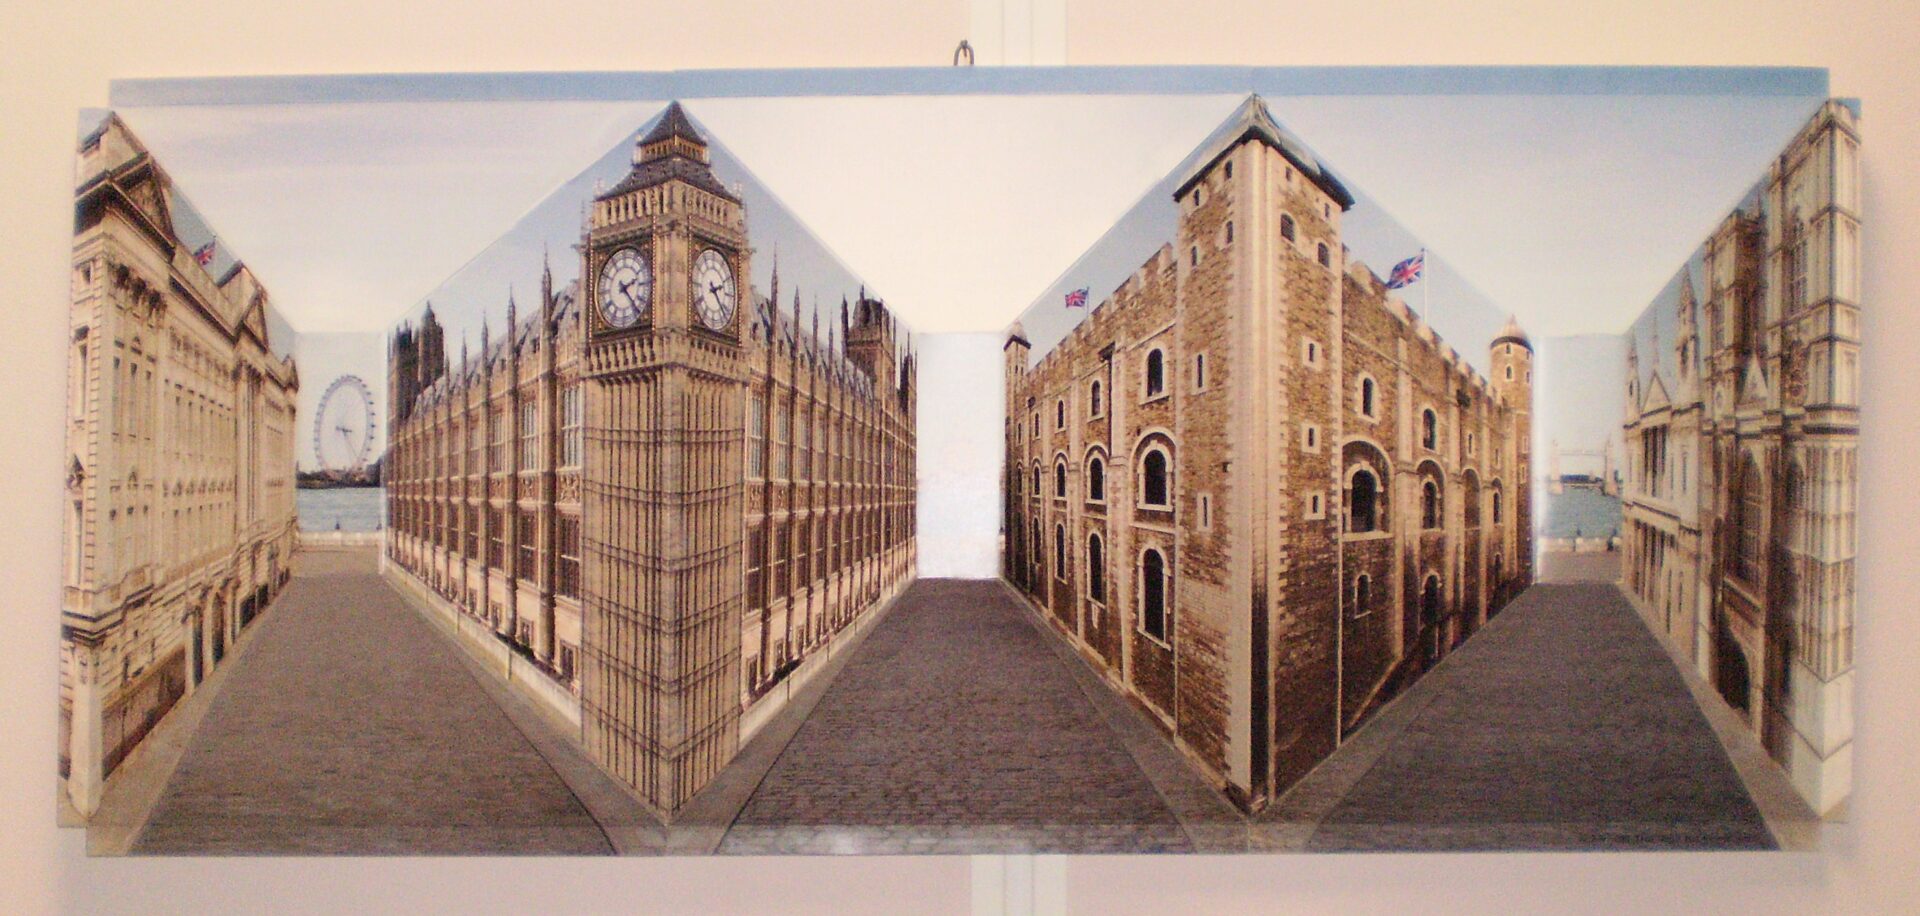 ‘3D’ optical illusion: Off the Wall art print “Landmarks of London”